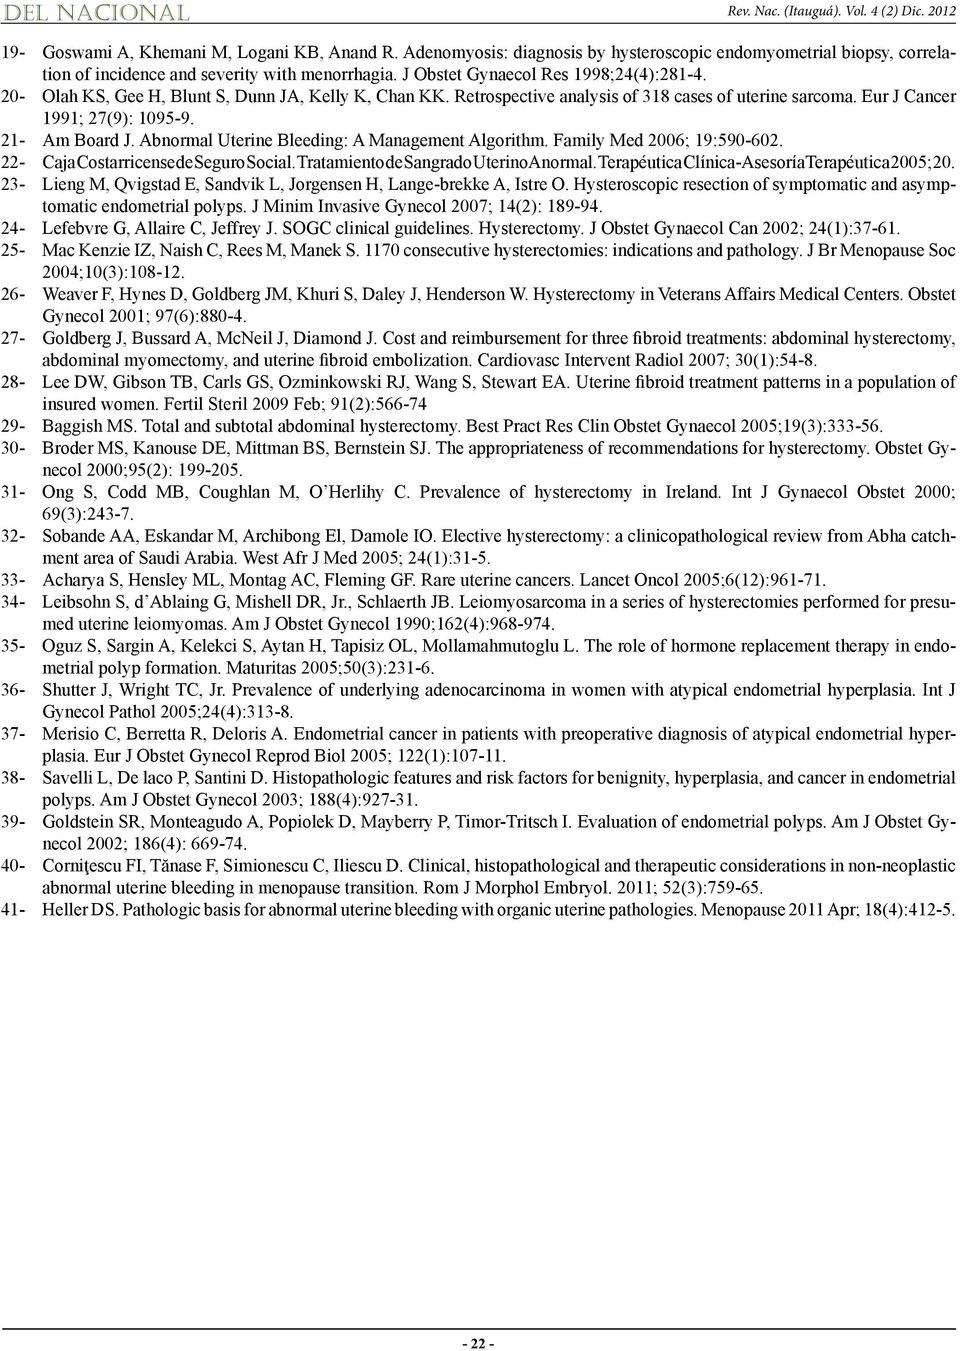 20- Olah KS, Gee H, Blunt S, Dunn JA, Kelly K, Chan KK. Retrospective analysis of 318 cases of uterine sarcoma. Eur J Cancer 1991; 27(9): 1095-9. 21- Am Board J.